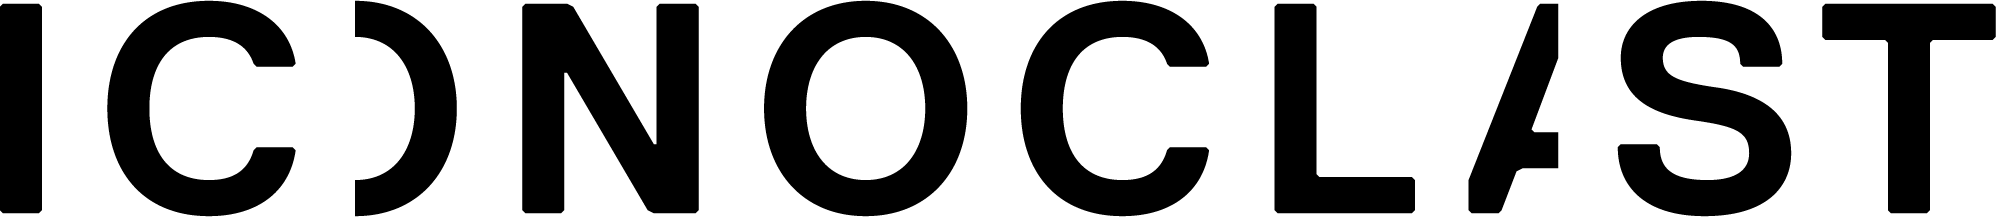 Iconoclast Logo